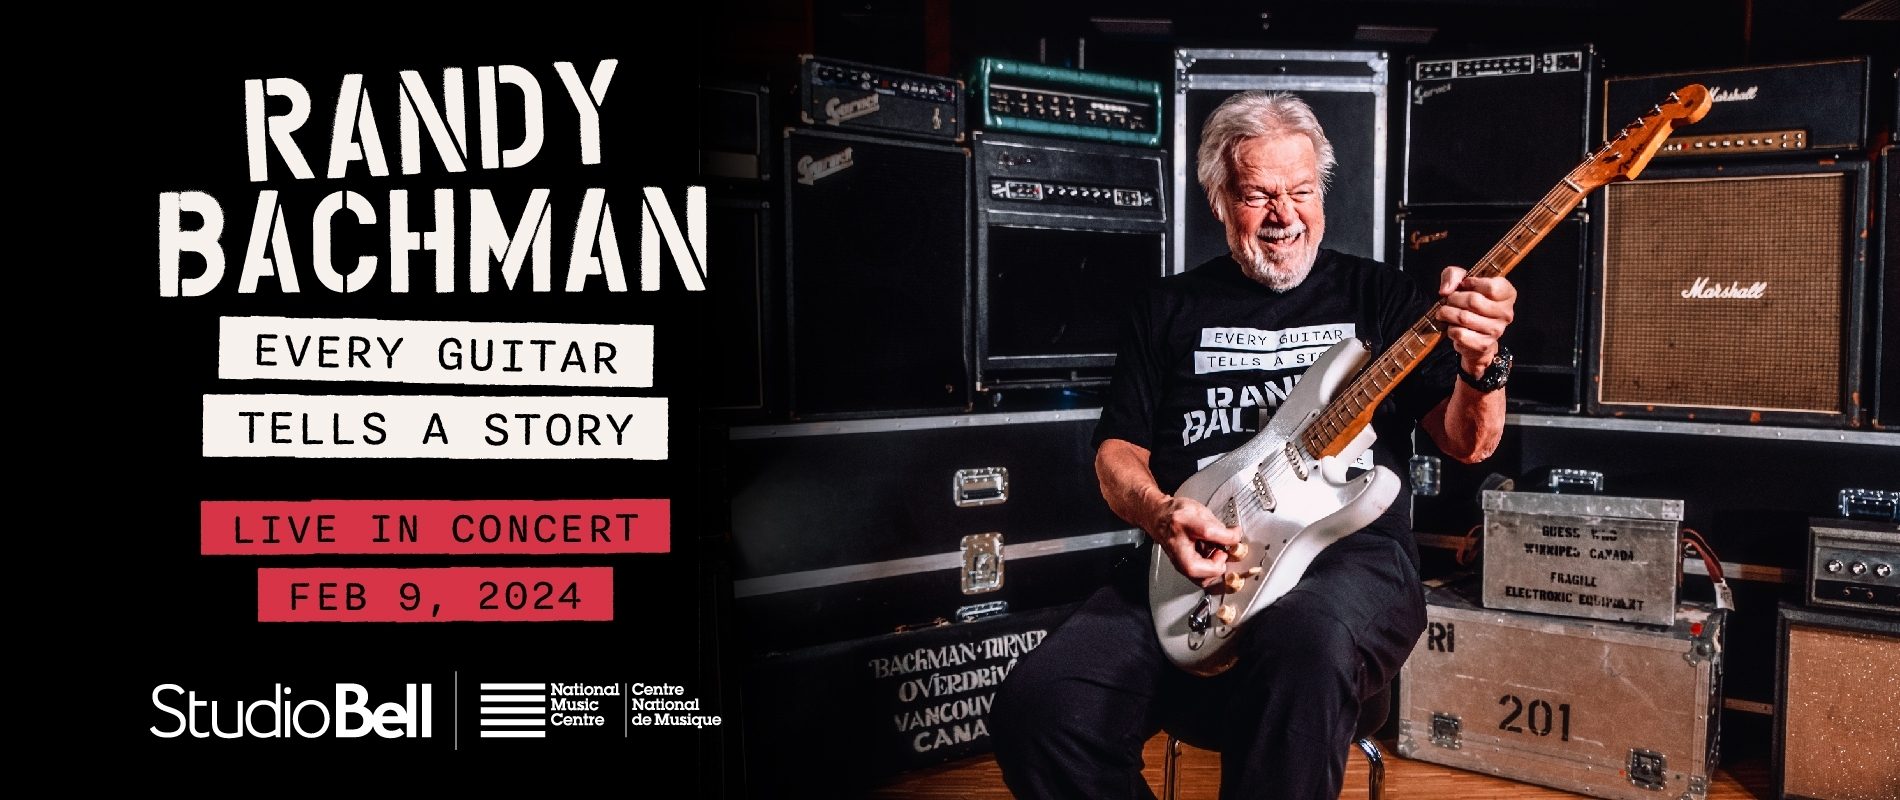 National Music Centre Announces Randy Bachman Live on February 9